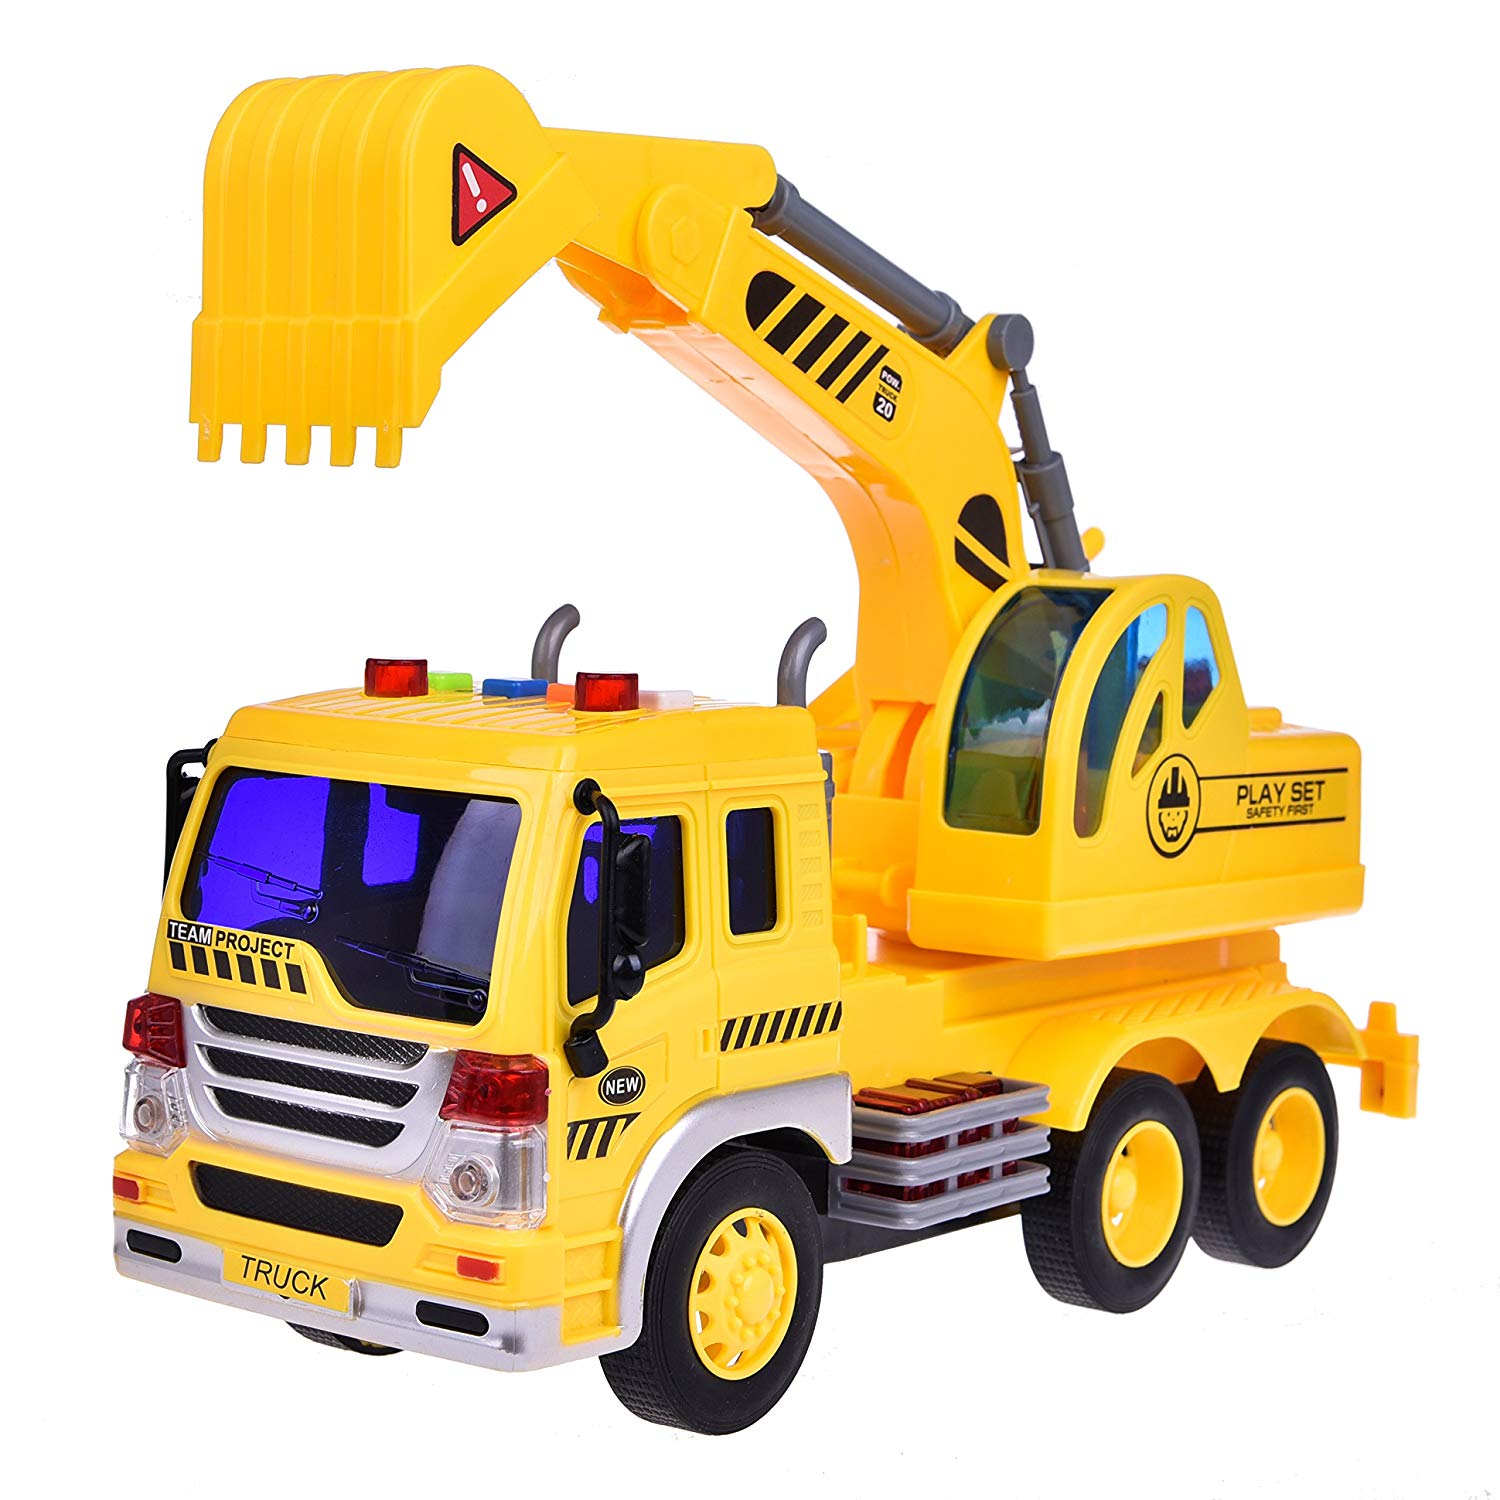 Amazon.com: Excavator Truck Construction Trucks Toys for Boys ...